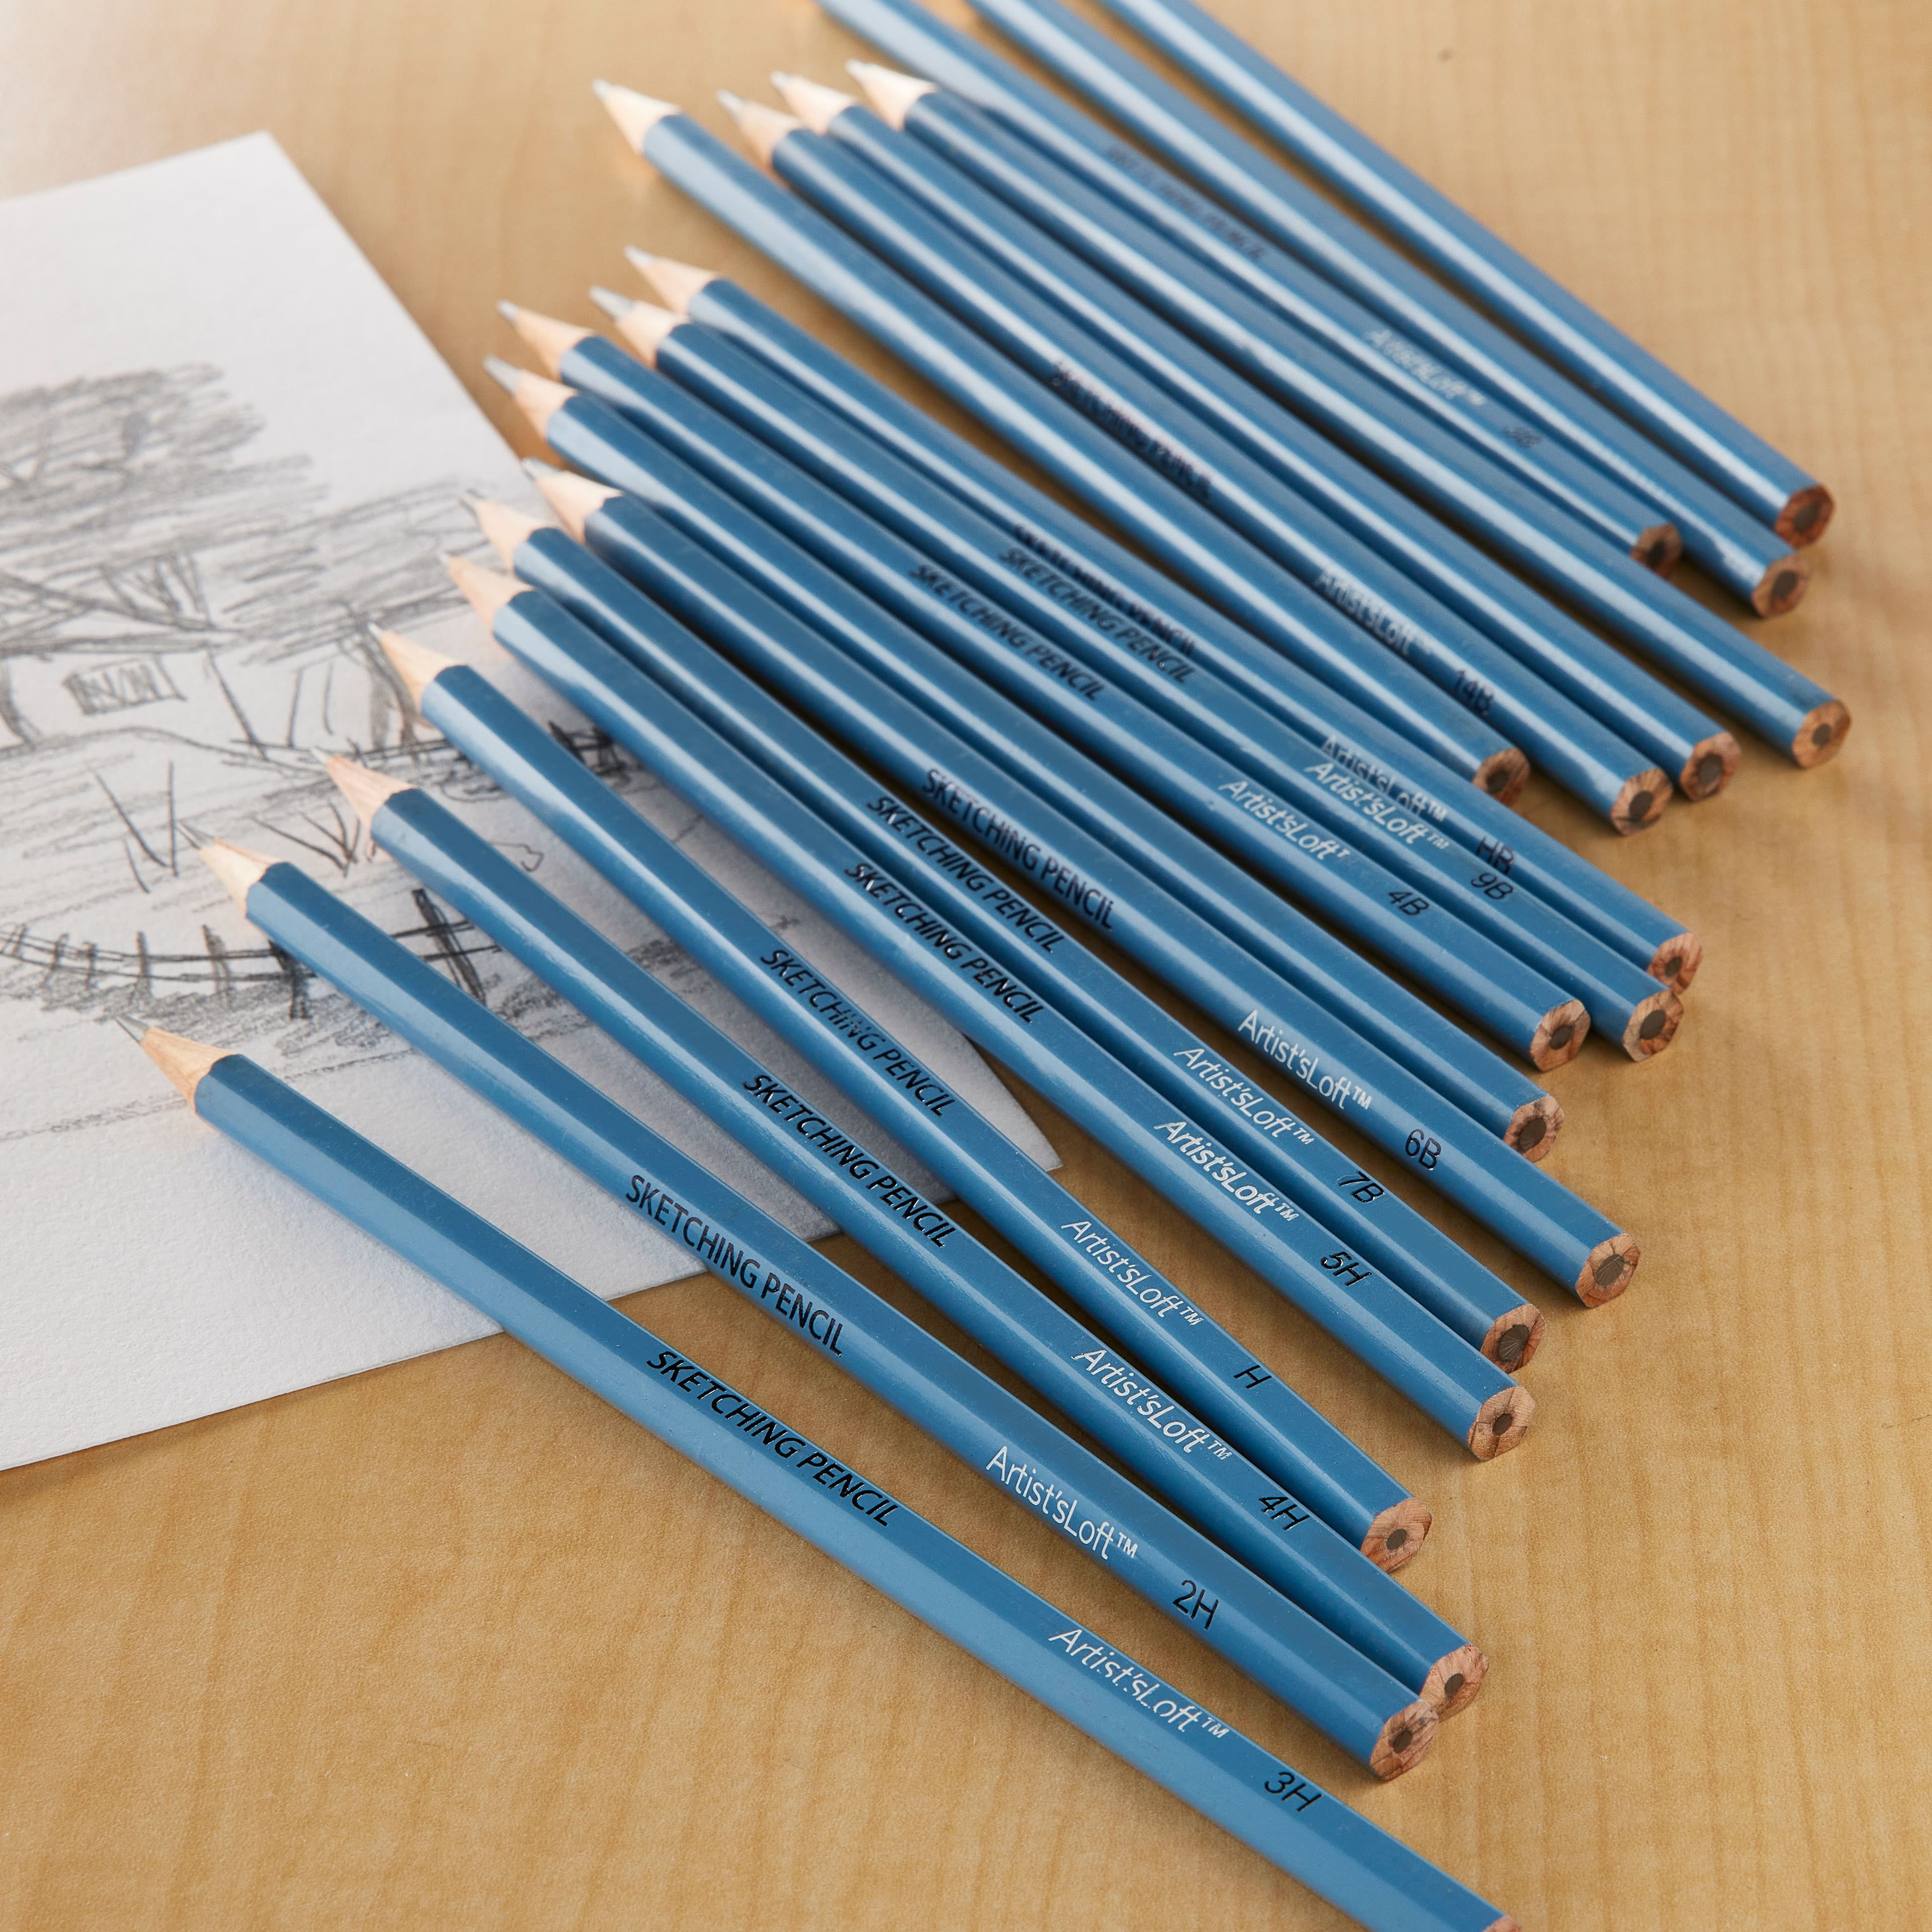 Sketching Pencil Set by Artist's Loft®, 10